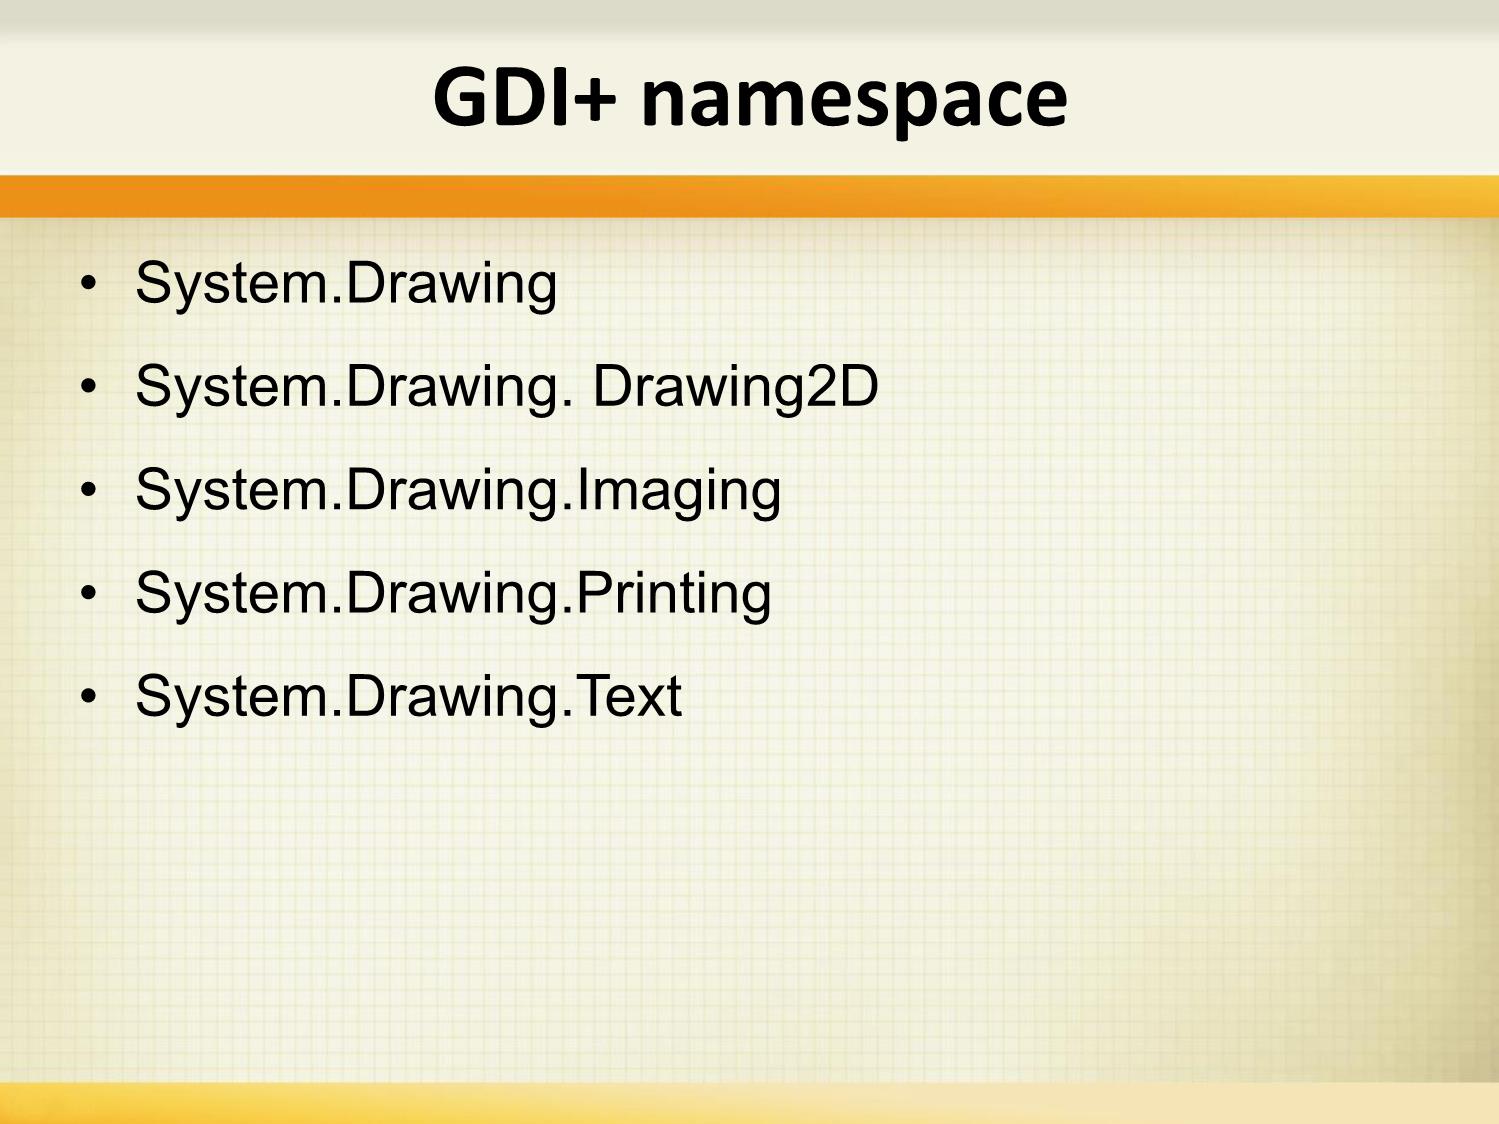 GDI+ (Graphic Device Interface) trang 5